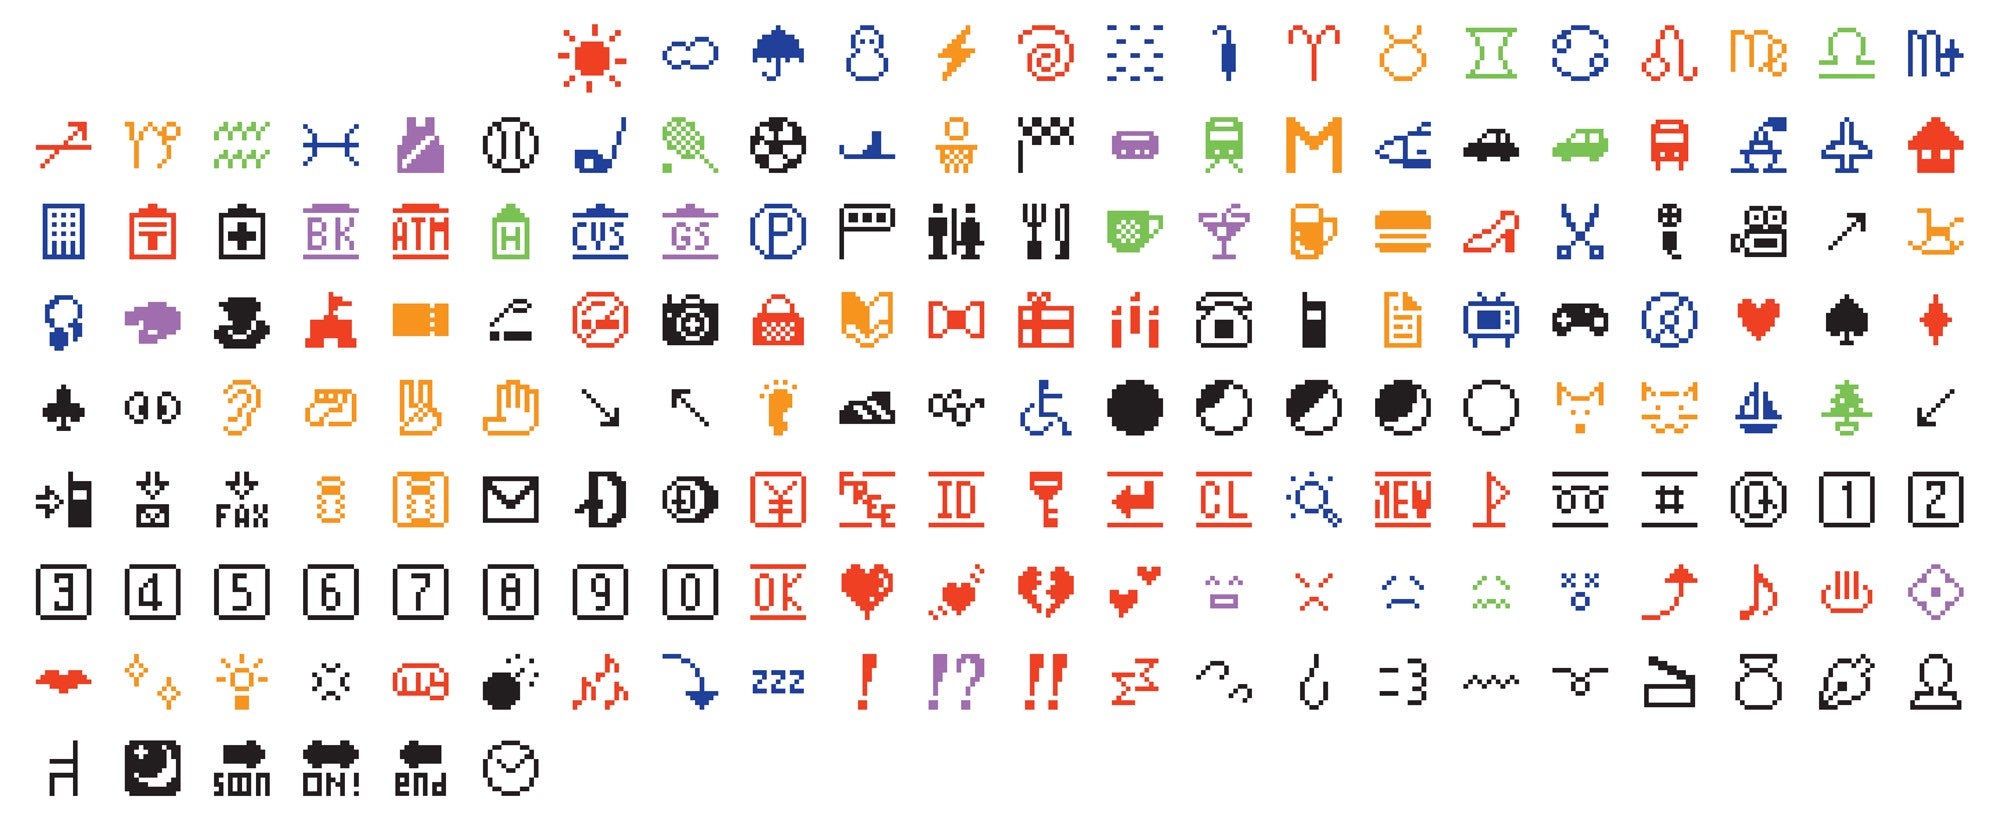 The original Emoji set. - Dummy guide to Emoji: History, Nature and Usage